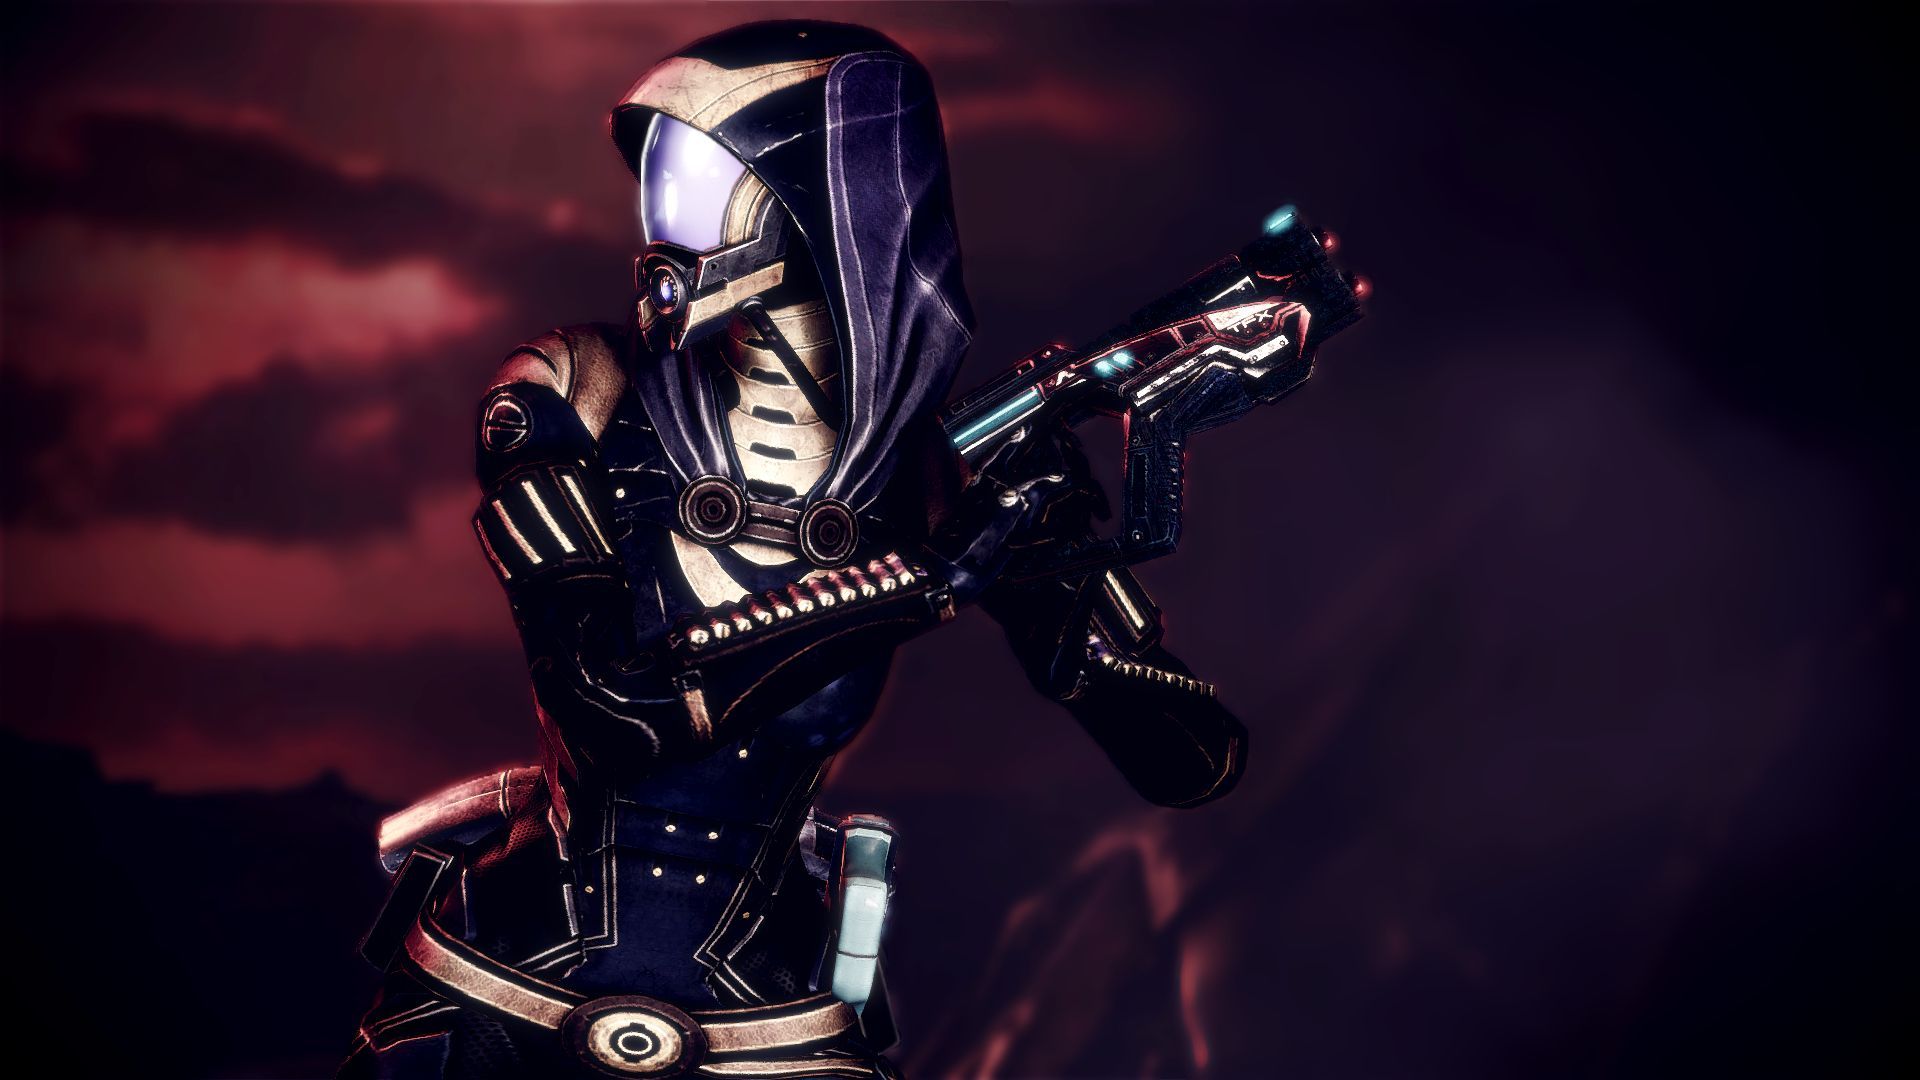 Mass Effect Tali Zorah Warrior sci-fi cyborg wallpaper | 1920x1080 ...